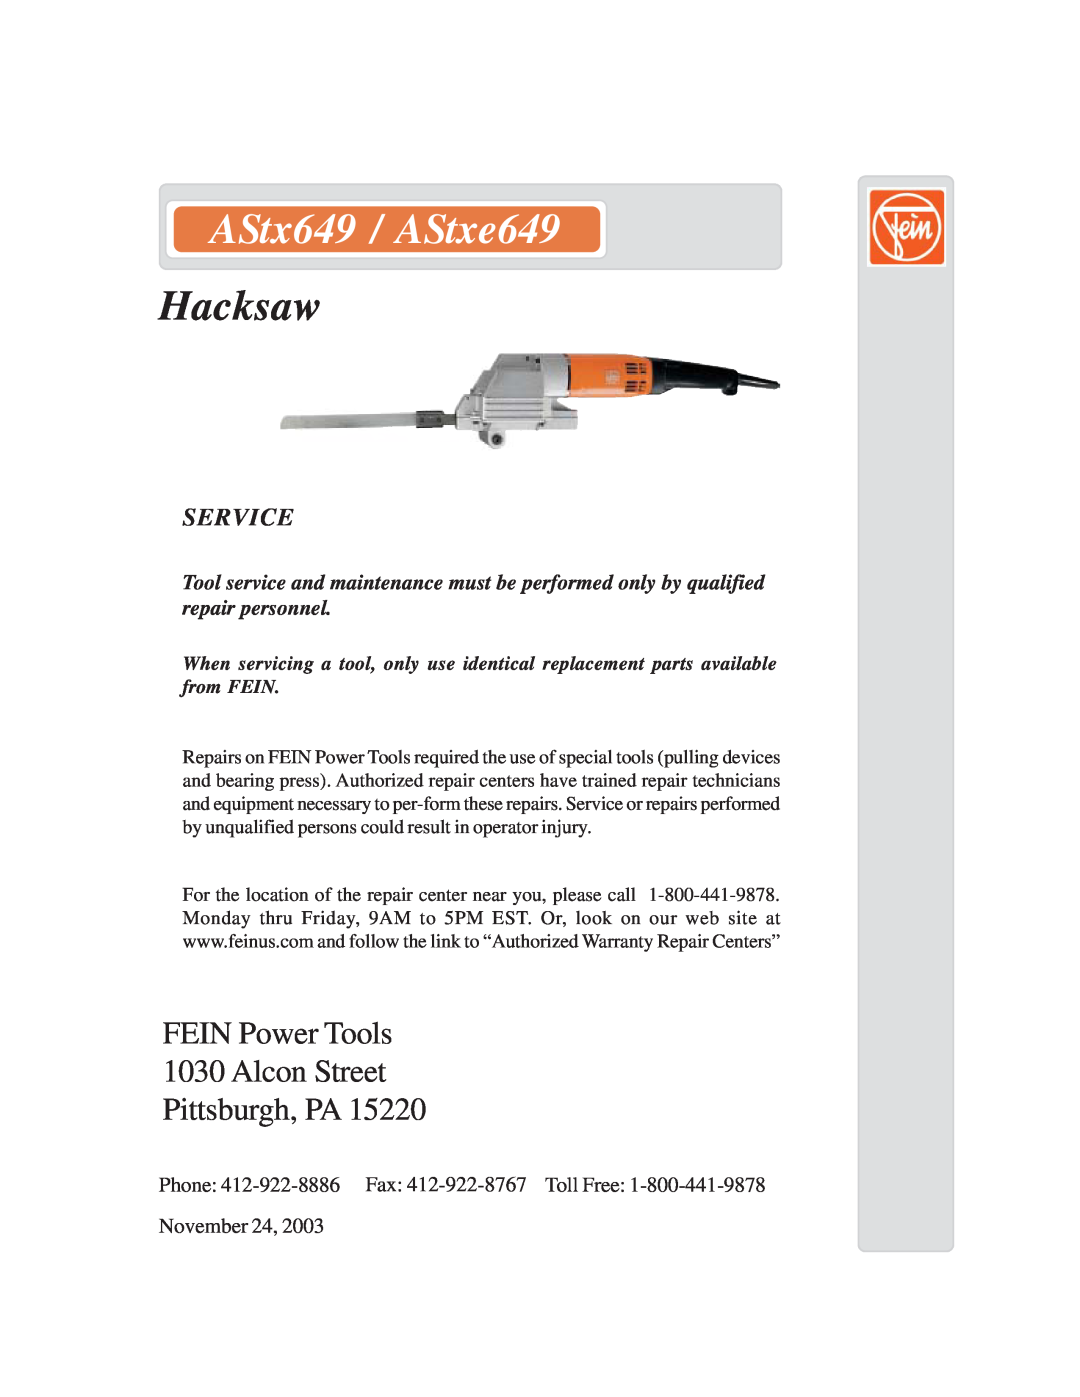 FEIN Power Tools warranty AStx649 / AStxe649, Hacksaw, FEIN Power Tools 1030 Alcon Street Pittsburgh, PA, Service 